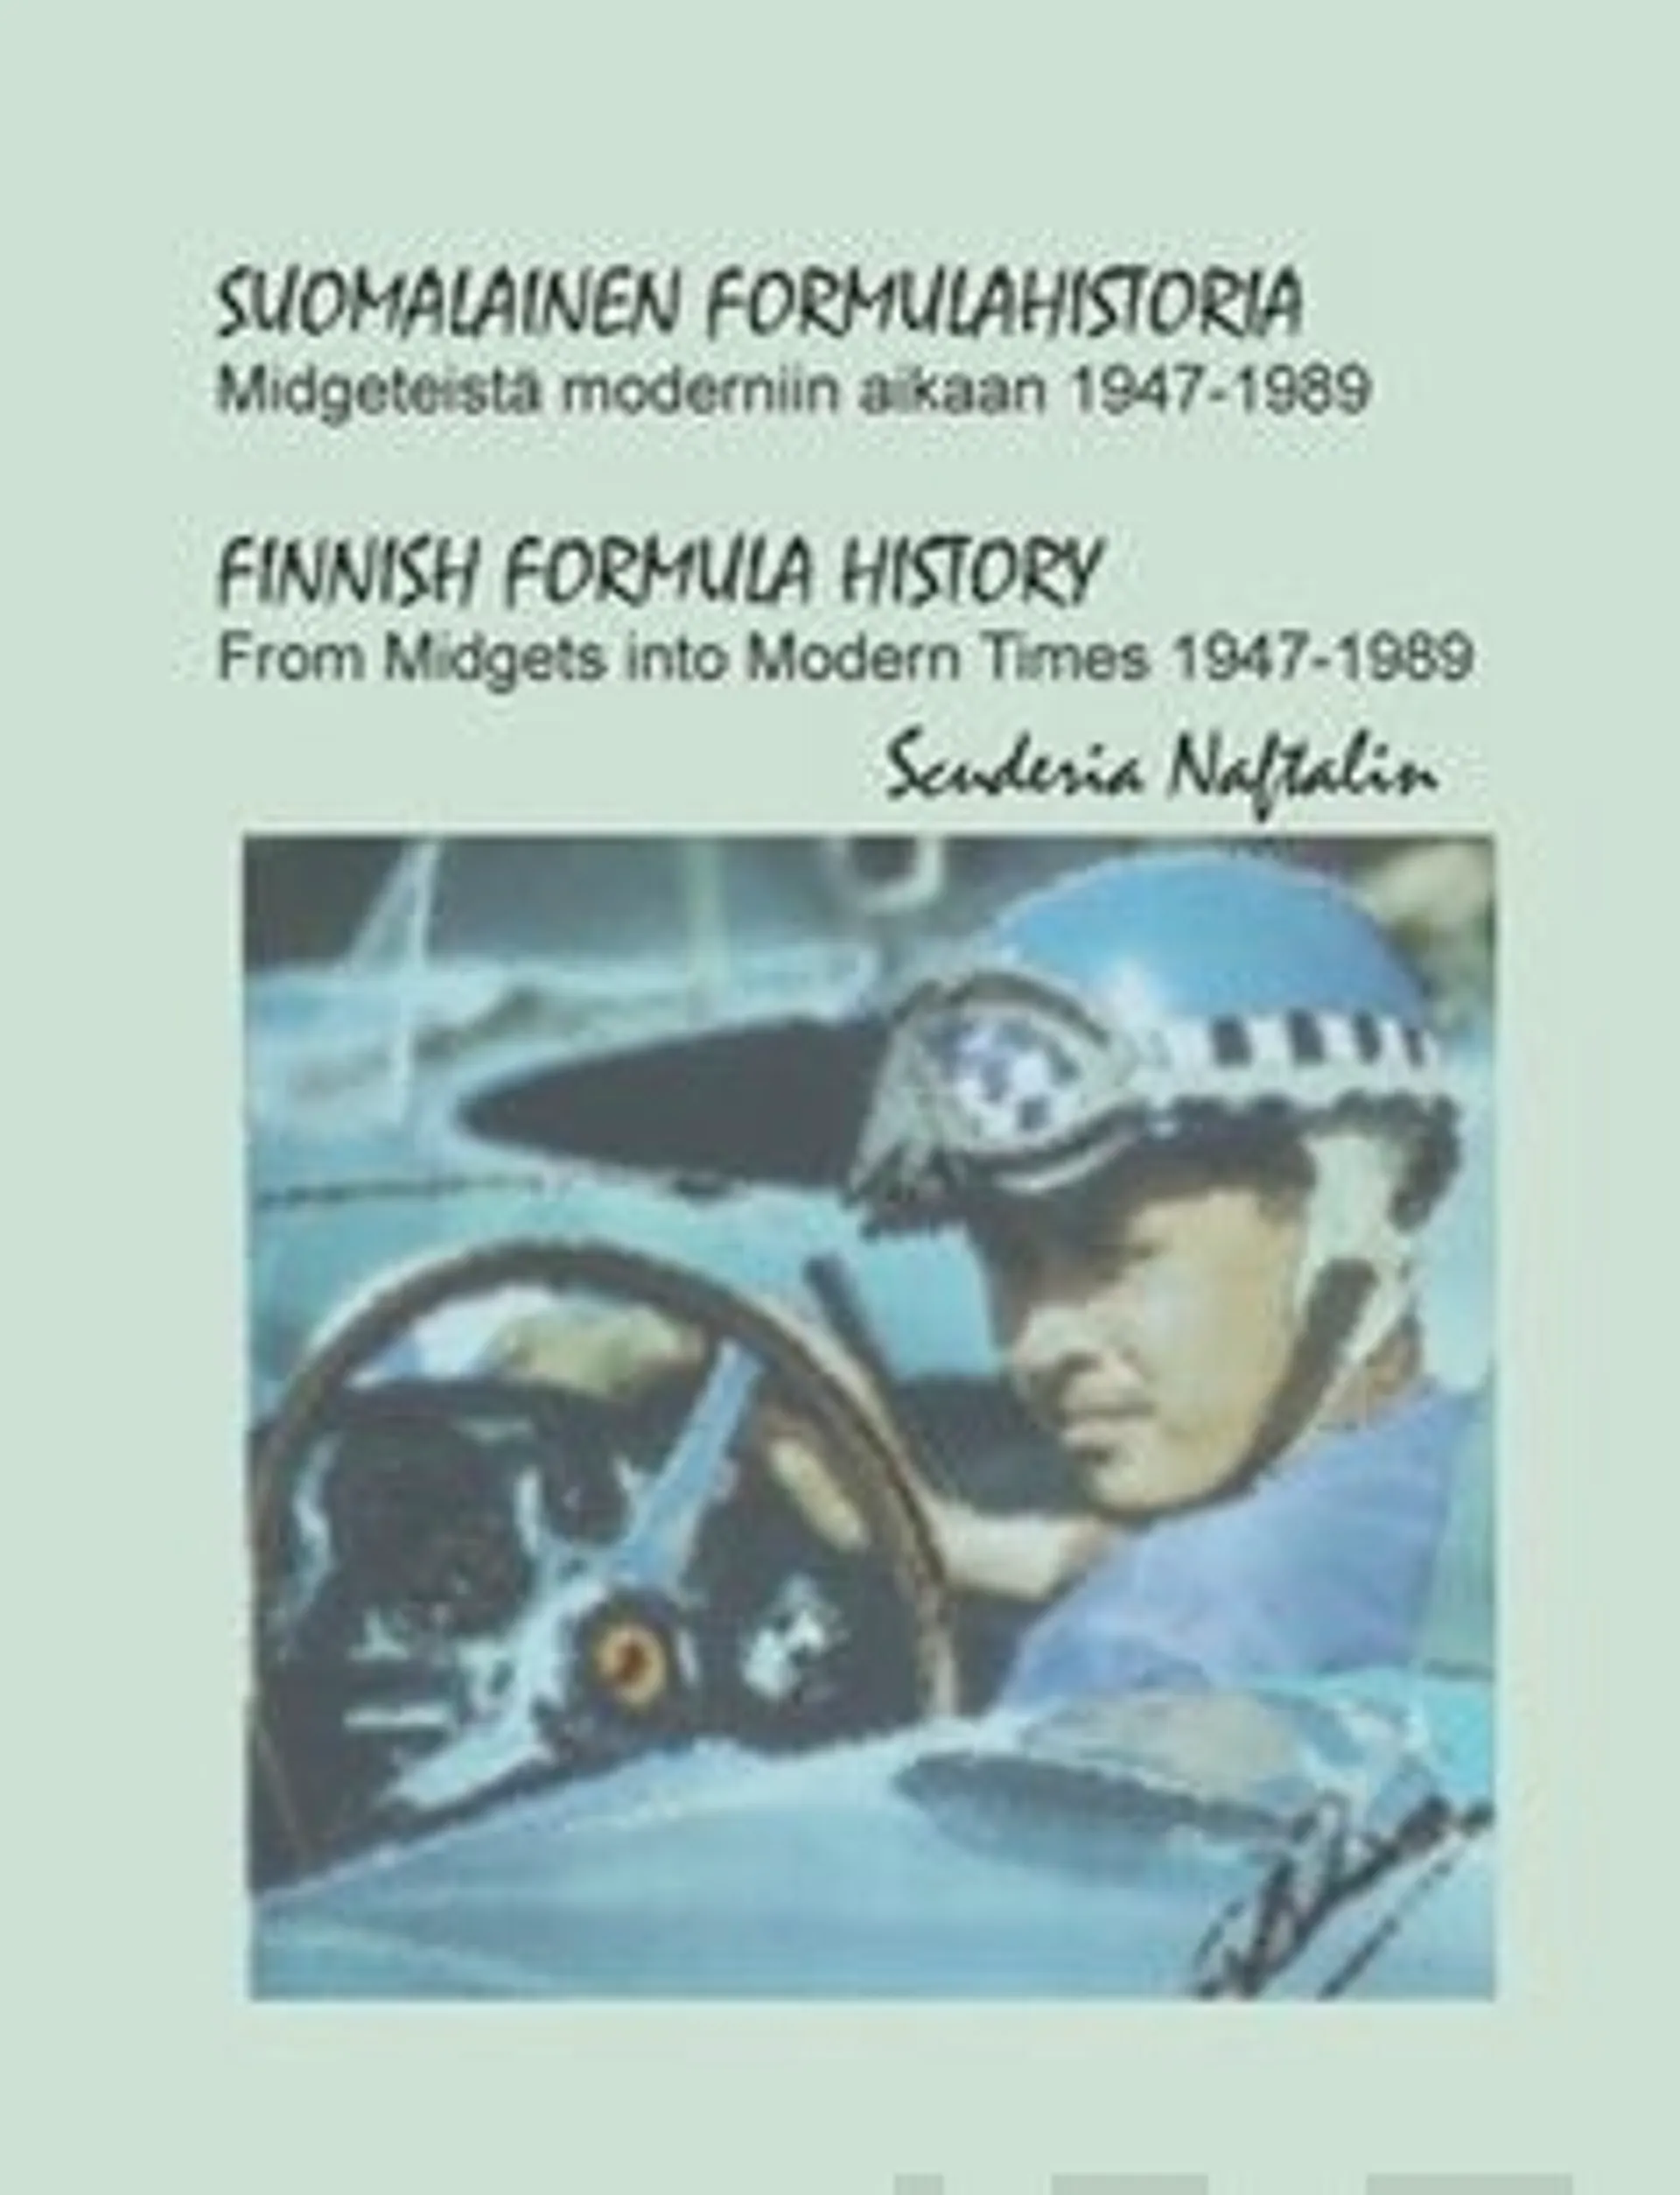 Naftalin, Suomalainen formulahistoria 1947-1989 - Finnish Formulahistory 1947-1989